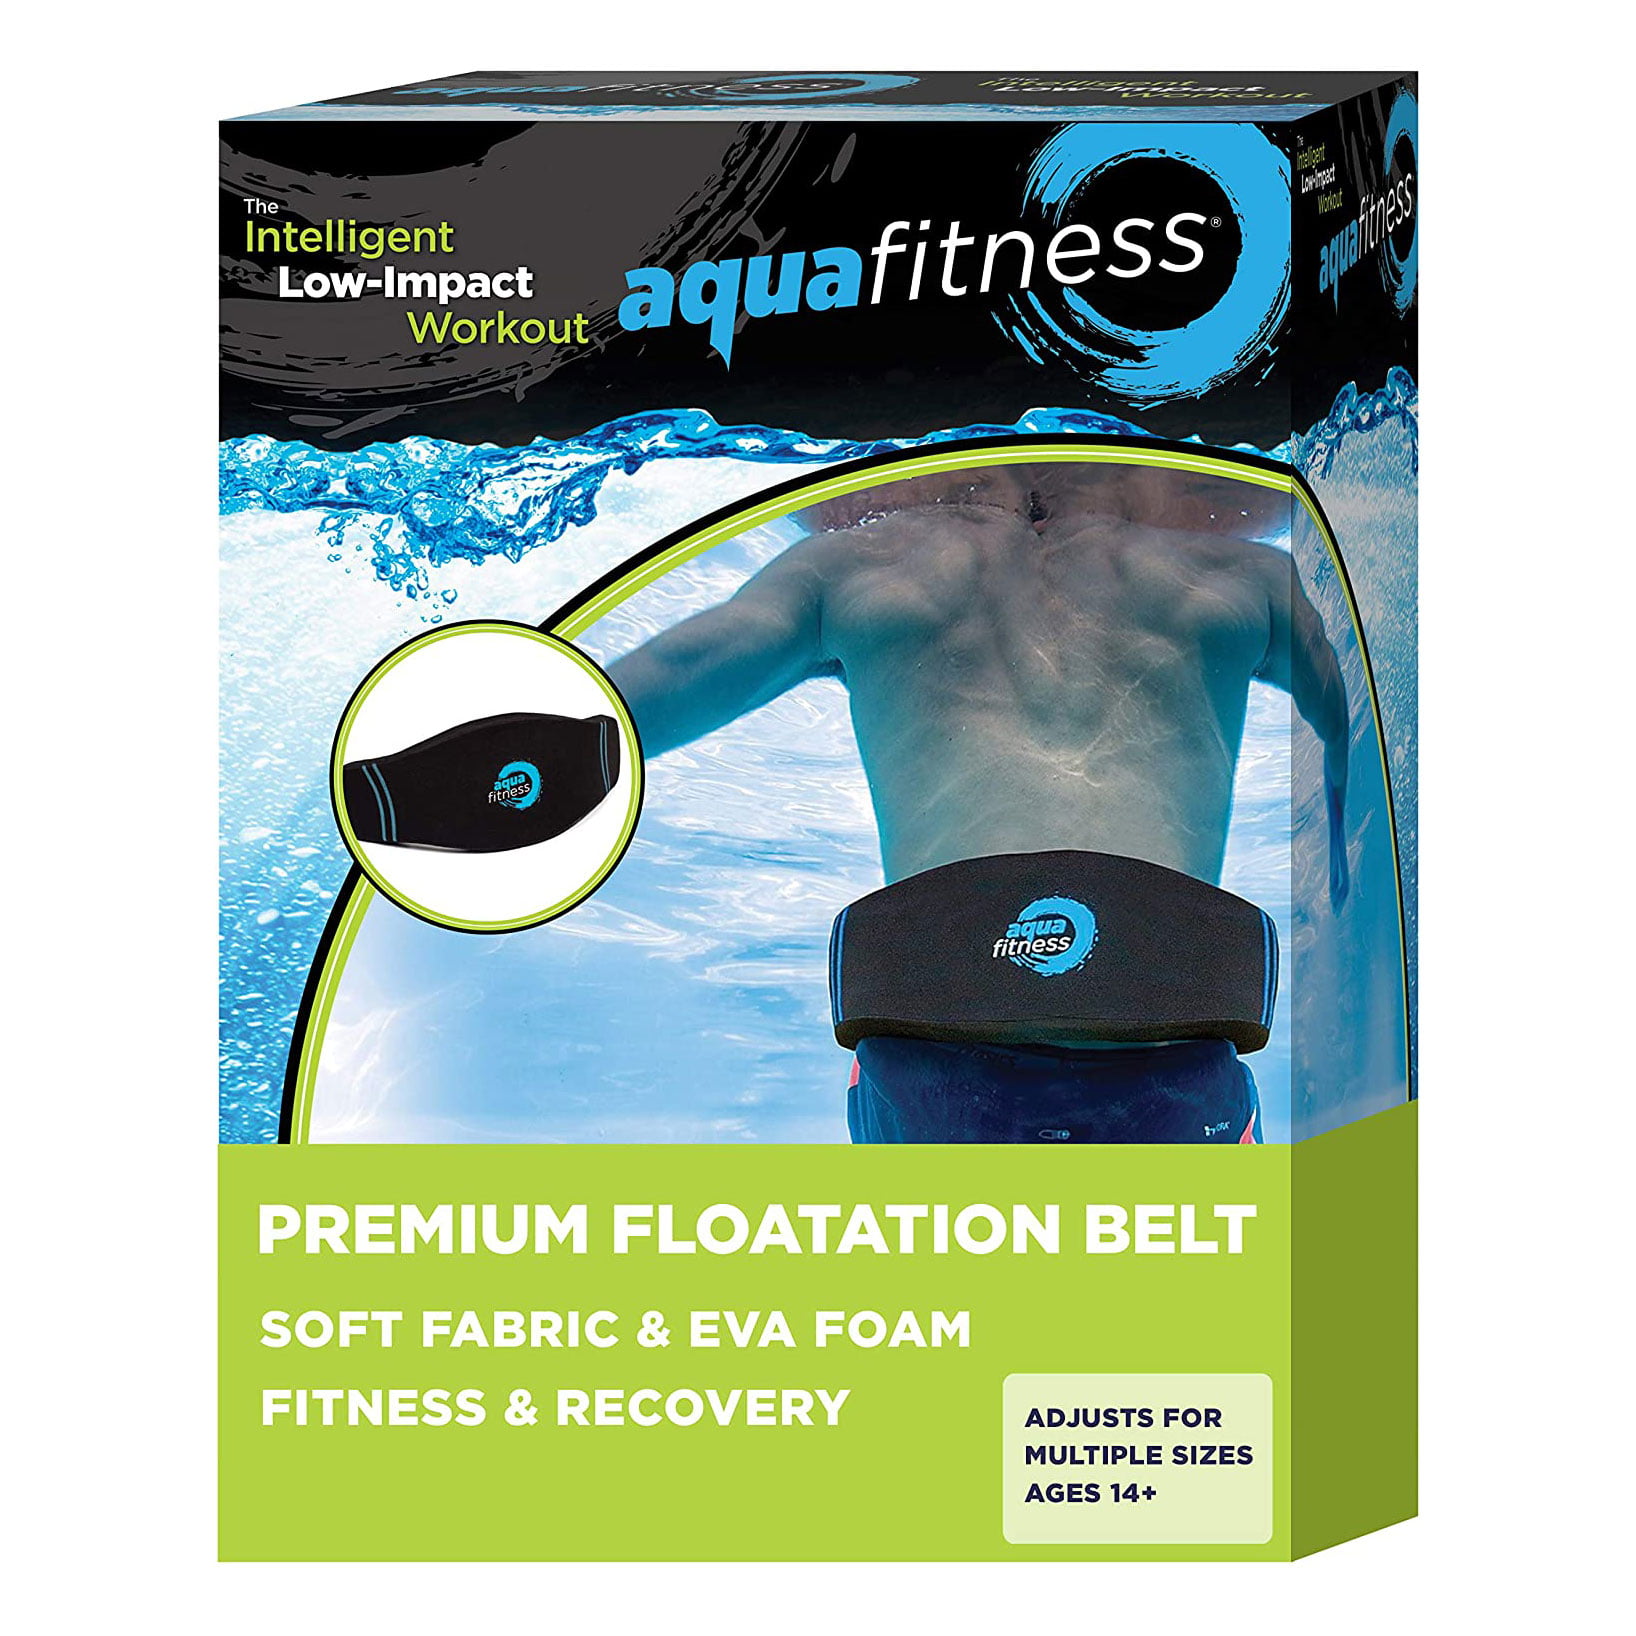 Aqua Fitness Deluxe Fitness Exercise Aerobic Resistance Training Flotation  Belt 